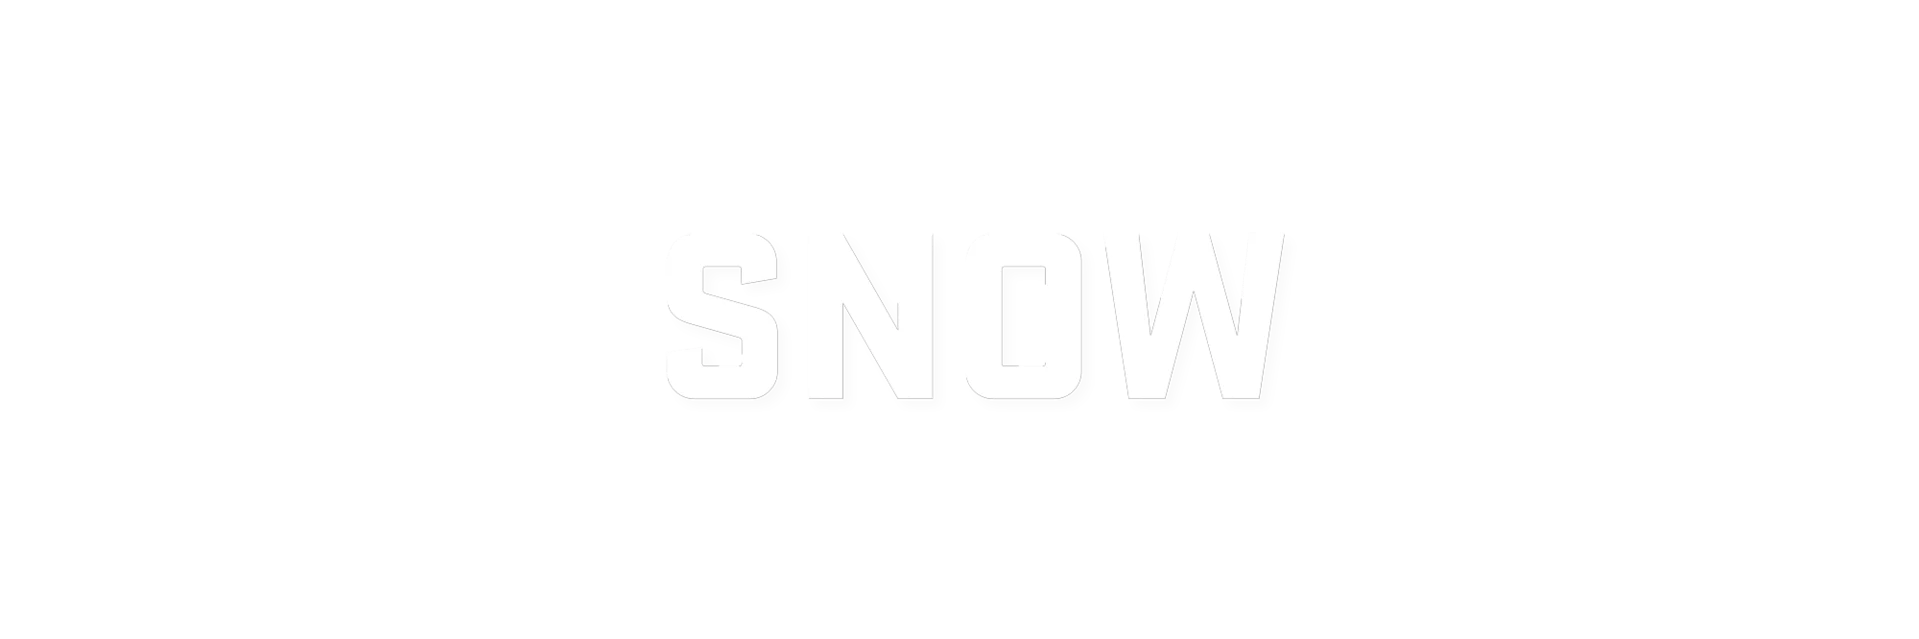 Men's Snow Sports  Header Image Text Overlay